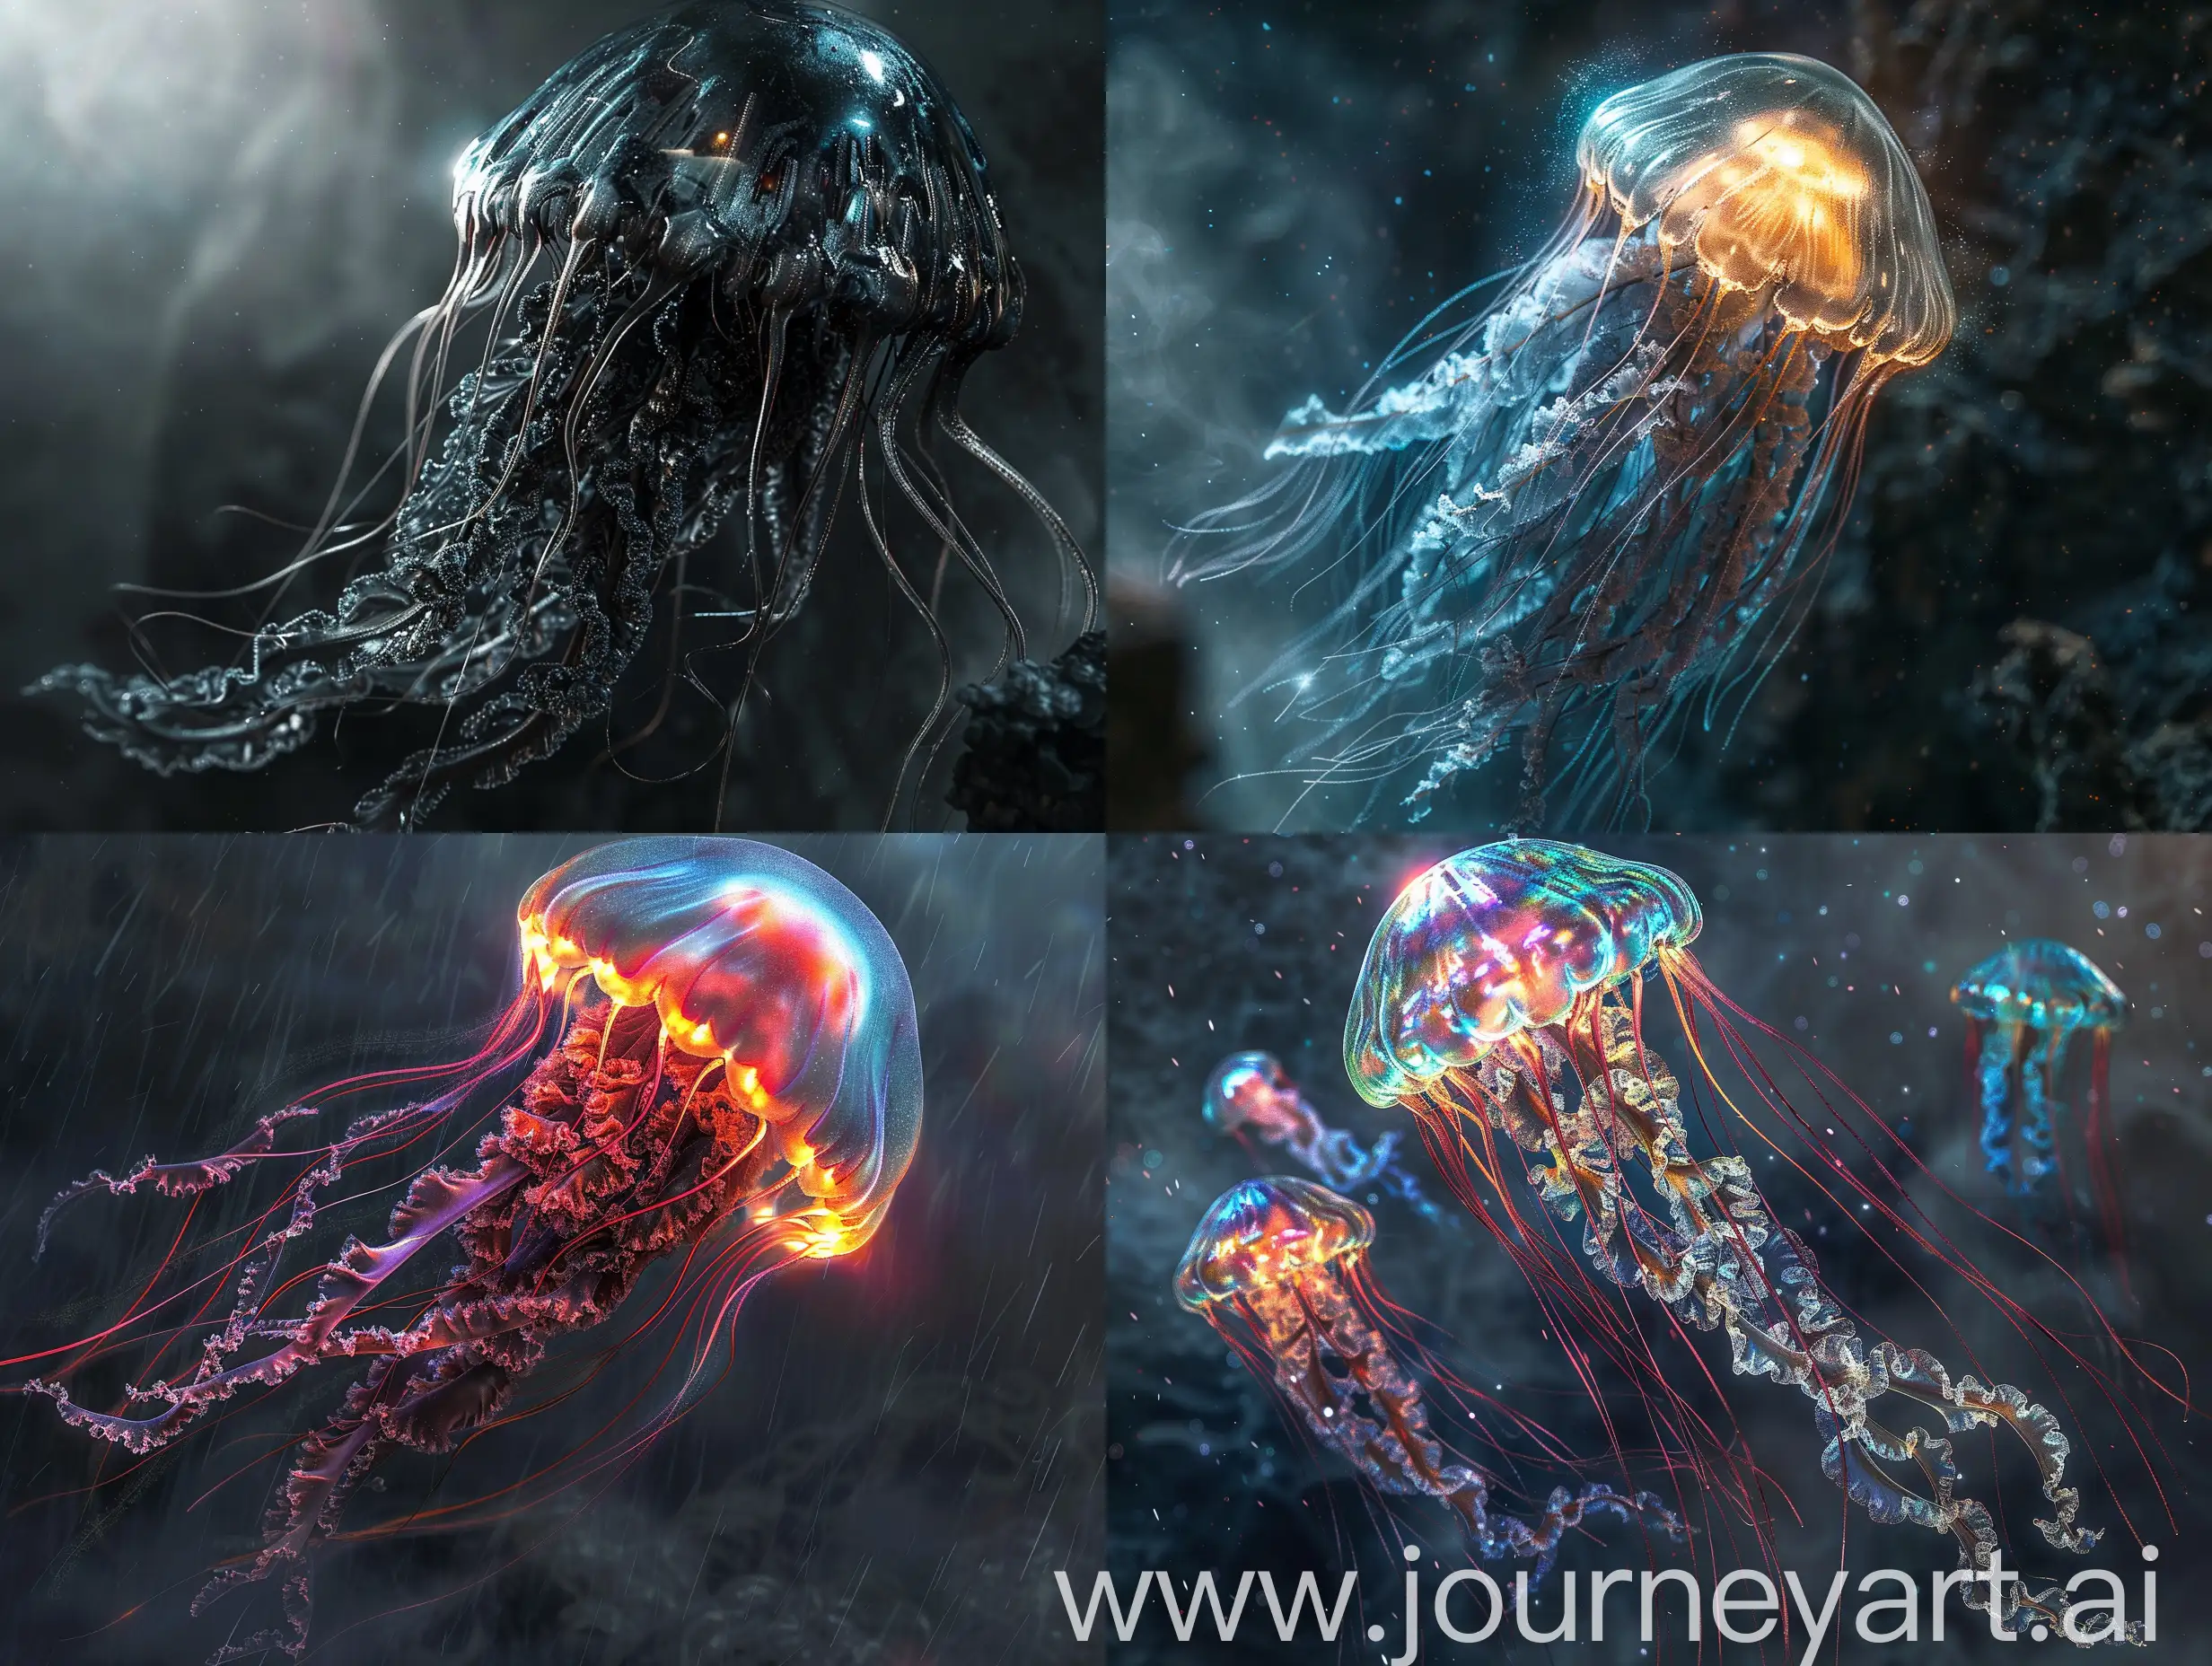 Mystical-Gargon-Jellyfish-Illuminated-in-Titian-Light-Against-Ominouscore-Background